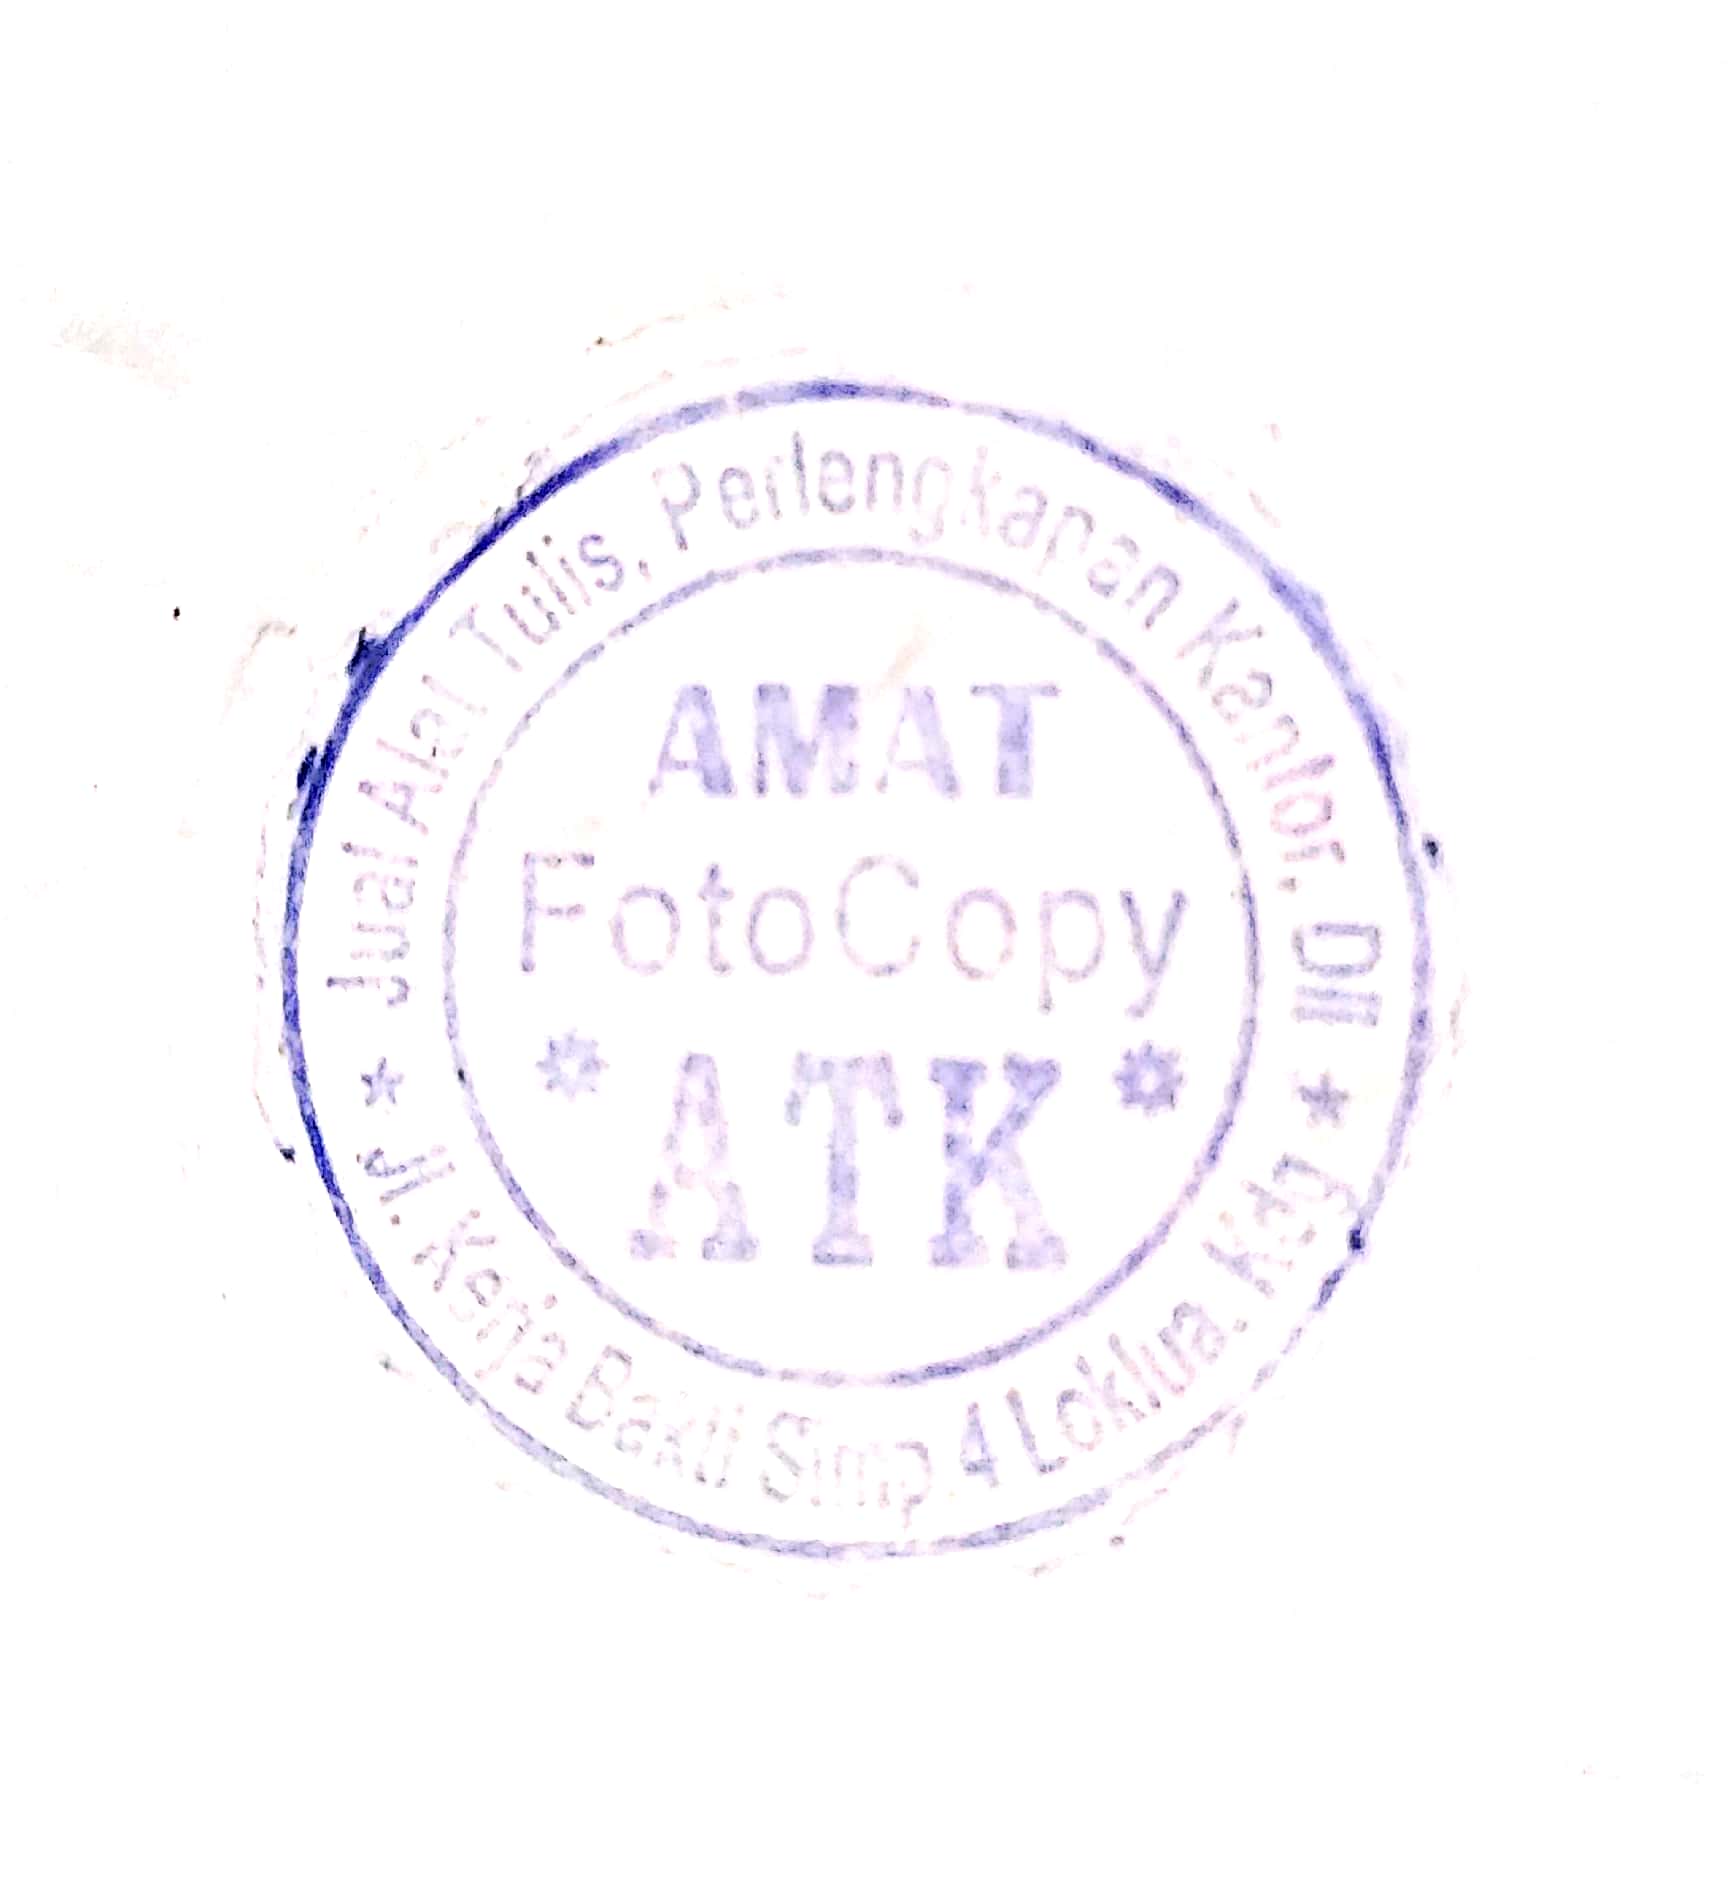 AMAT FOTOCOPY ATK